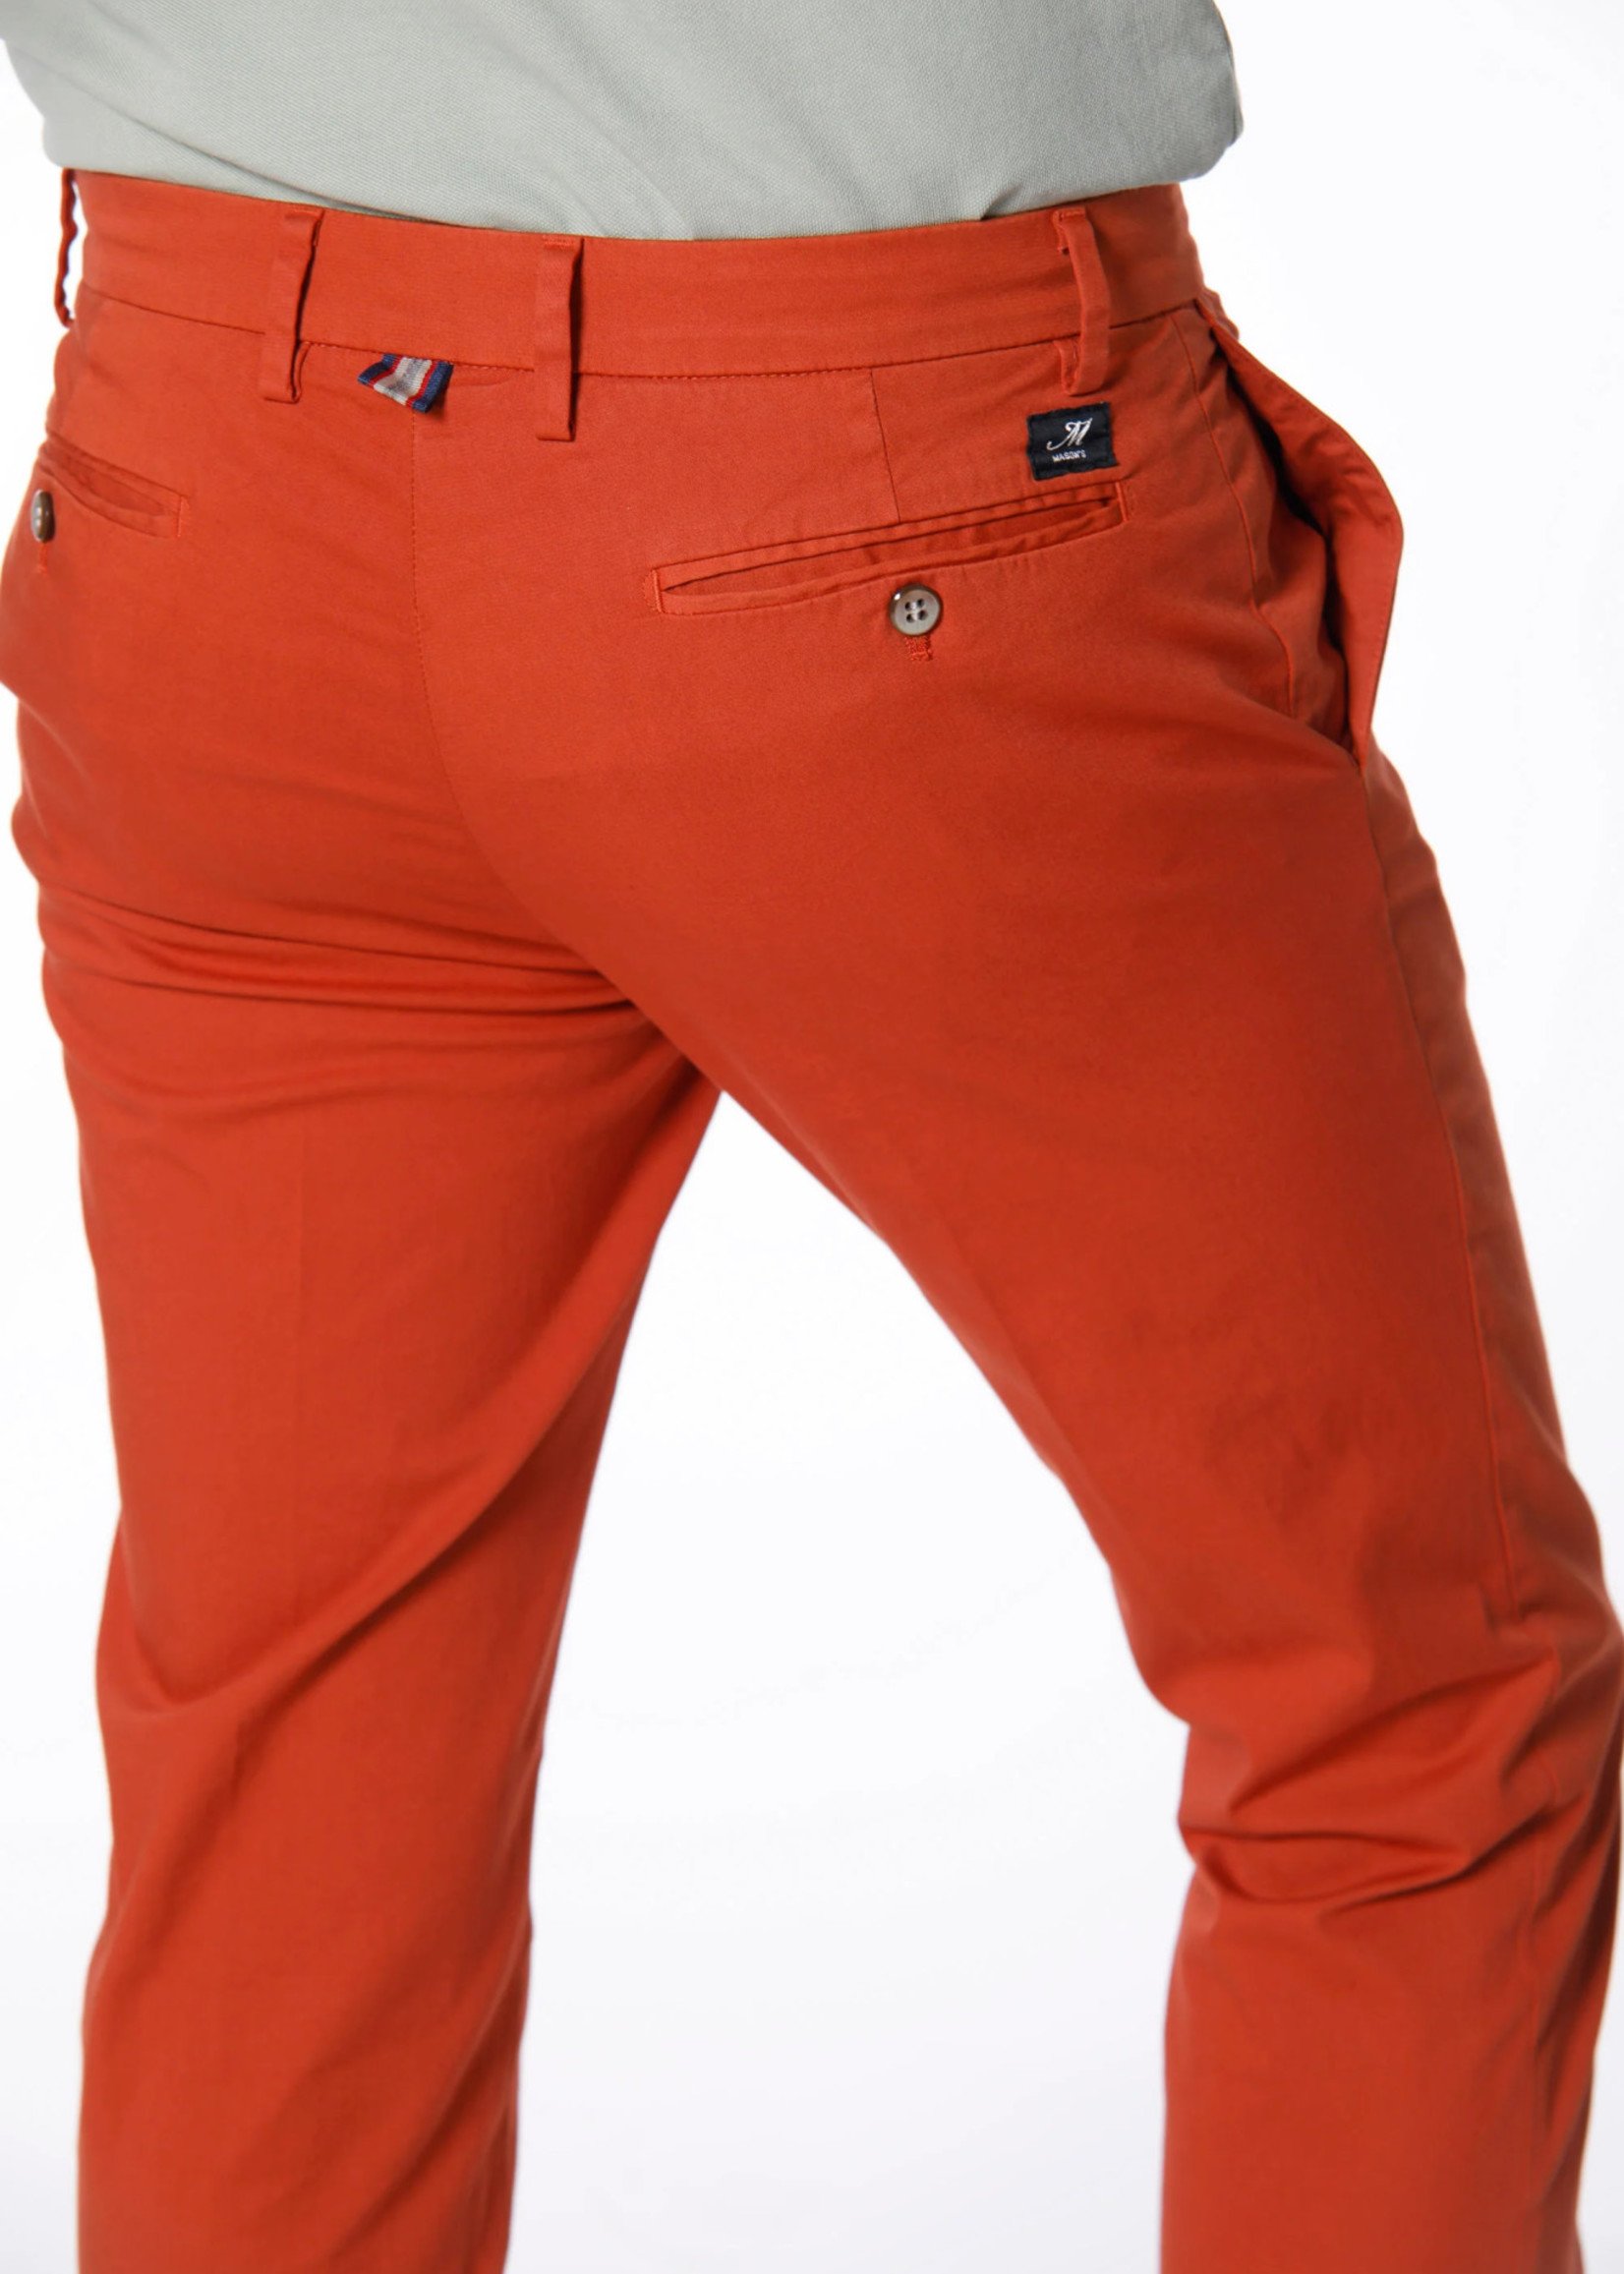 Corcini Men's Performance Flat Front Pant, Saddle, 32x30 at  Men's  Clothing store